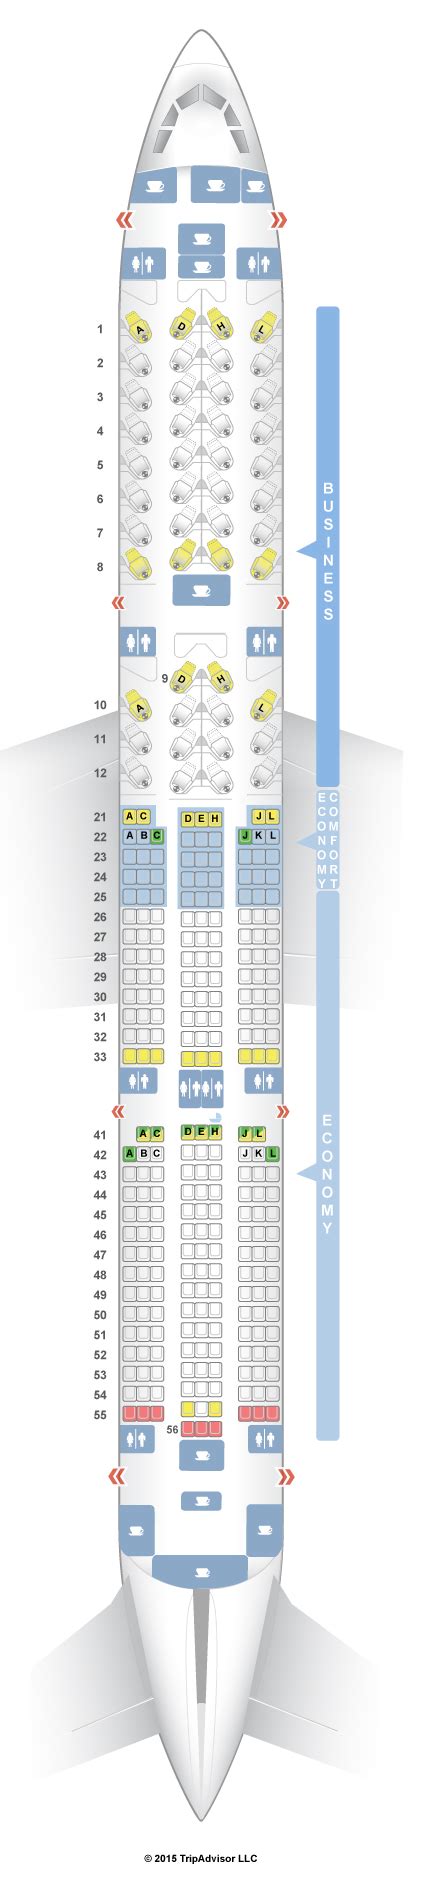 Seatguru airbus a350 900. Airbus A350-900 Layout 1 (350) Seats: Business 46 | Economy 208 | Economy Comfort 43. Airbus A350-900 Layout 2 (350) Seats: Business 32 | Economy 262 ... Seats: Business 16 | Economy 185. Airbus A321 (321) Layout 2 Seats: Business 16 | Economy 172. Embraer E-170 Seats: Business 12 | Economy 64. Embraer E-190 Seats: Business 12 | Economy 88 ... 